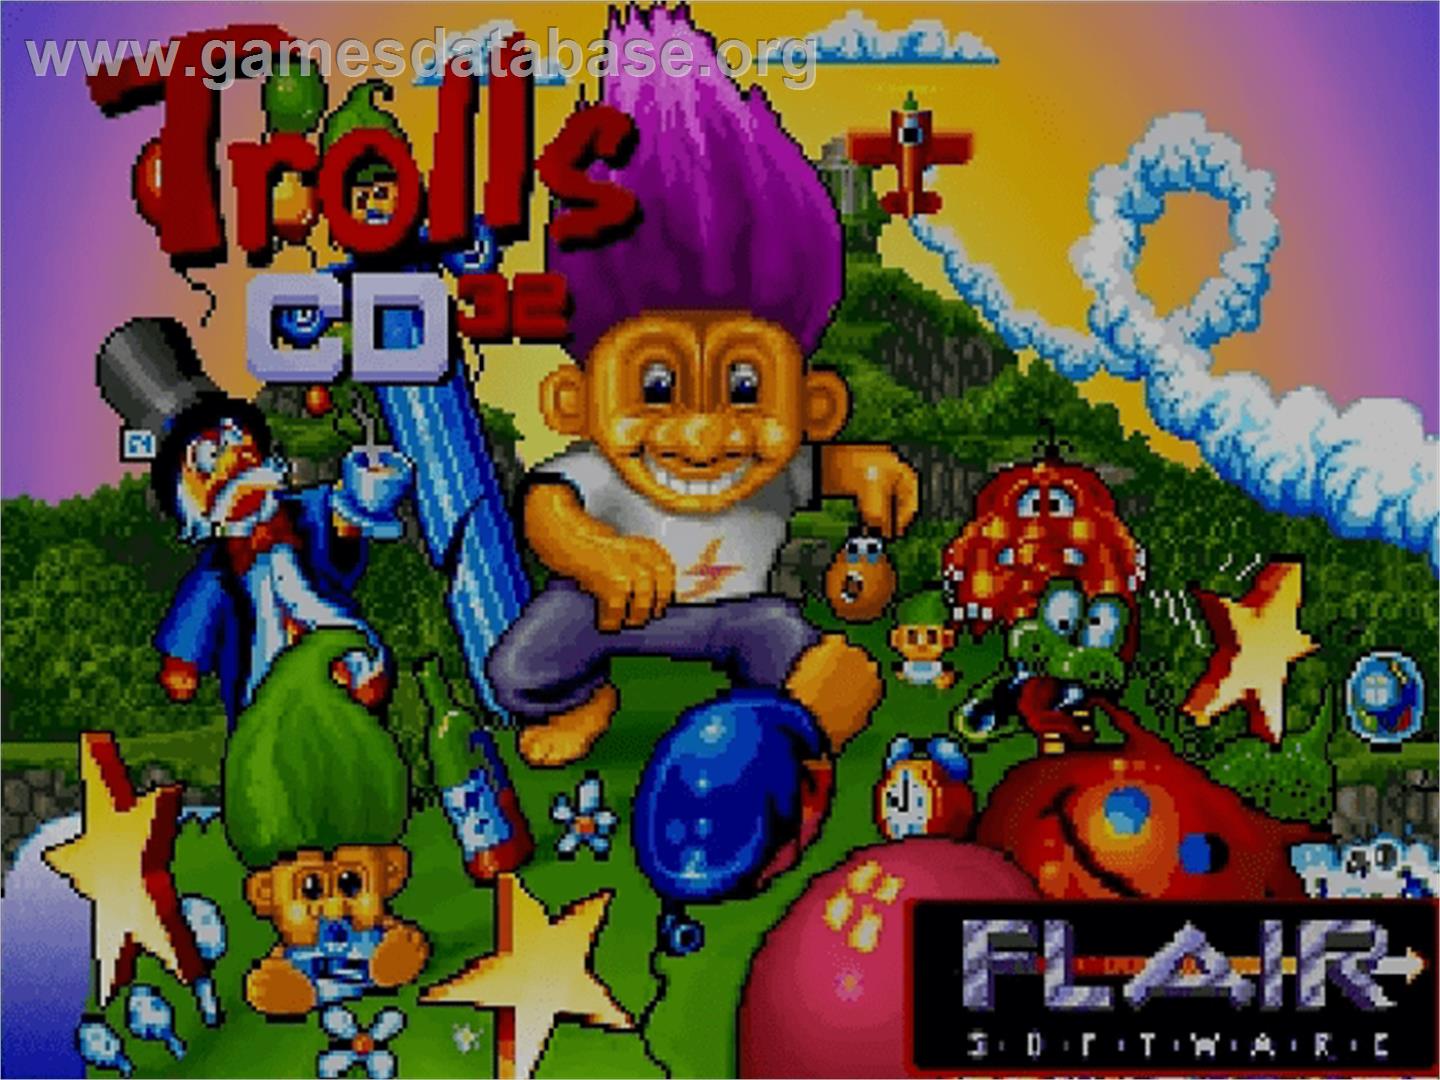 Trolls - Commodore Amiga CD32 - Artwork - Title Screen